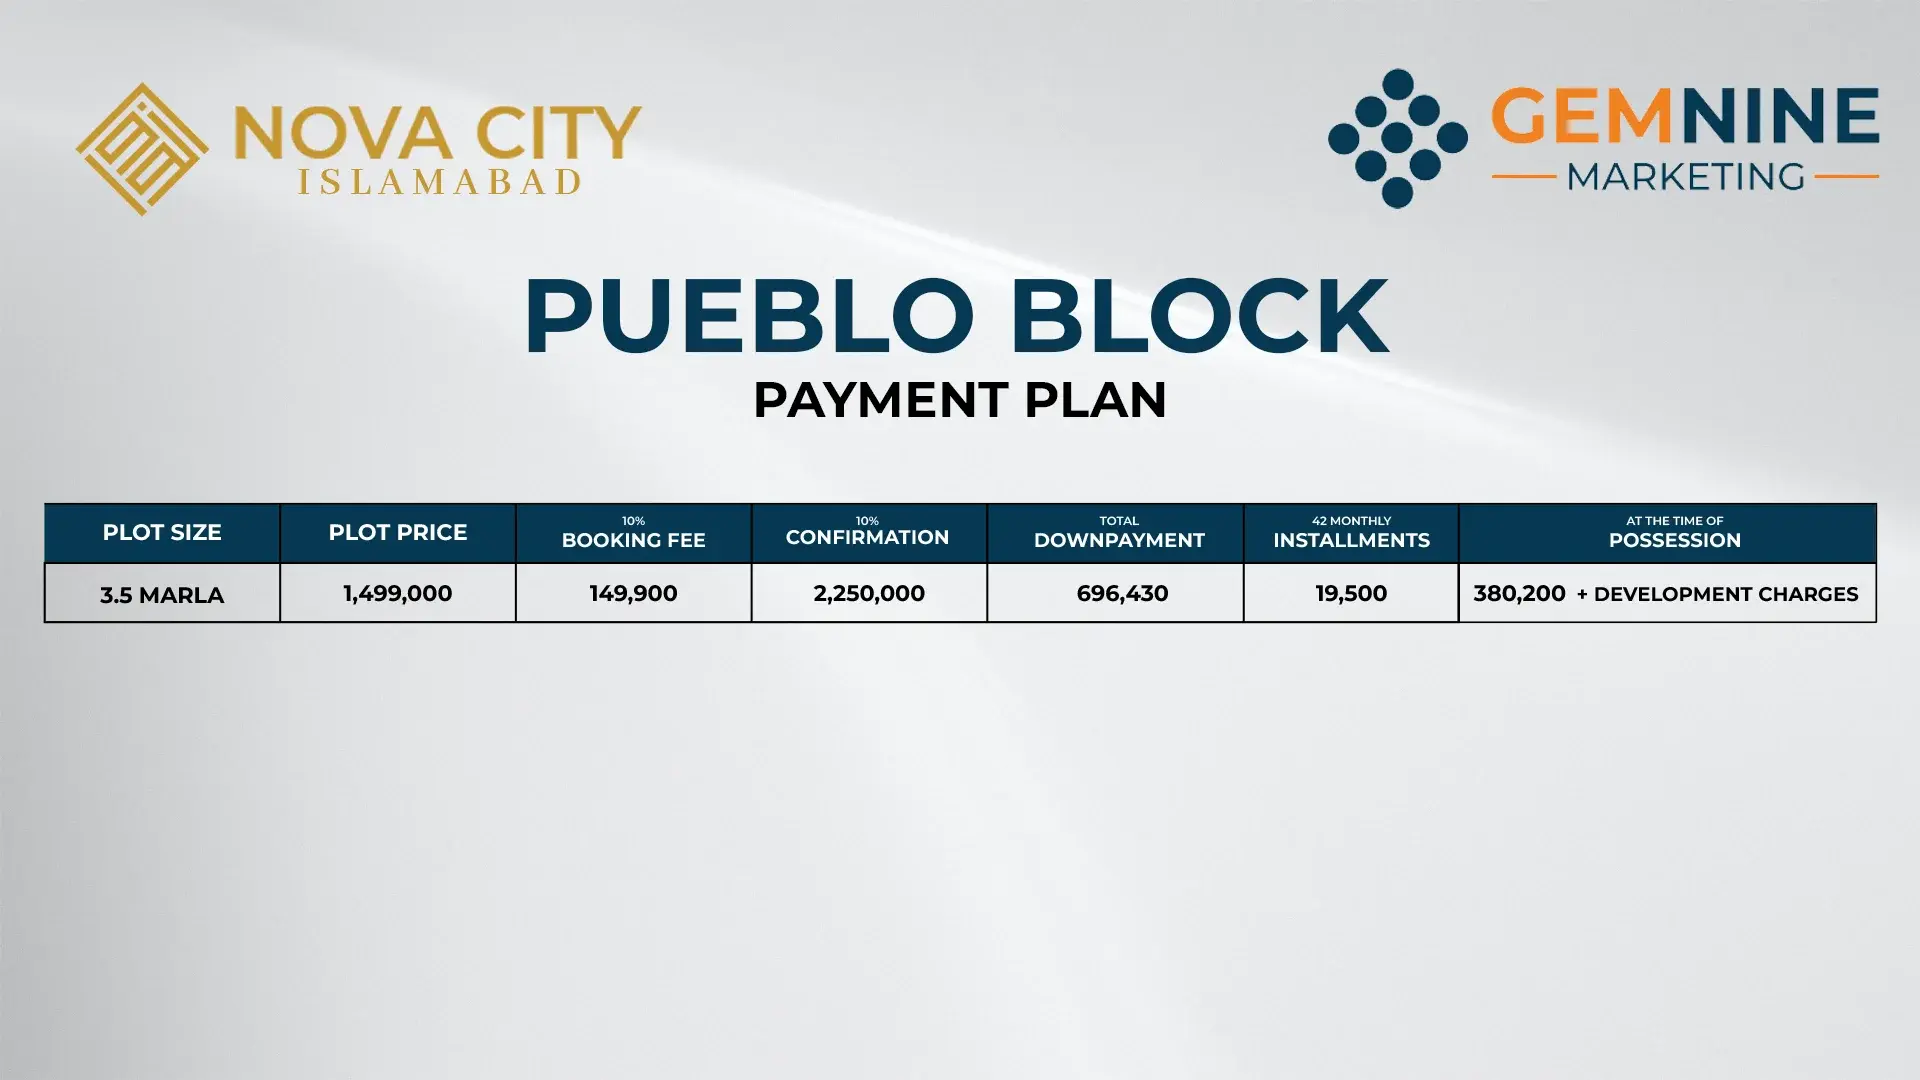 Nova City Islamabad Pueblo Block Payment Plan